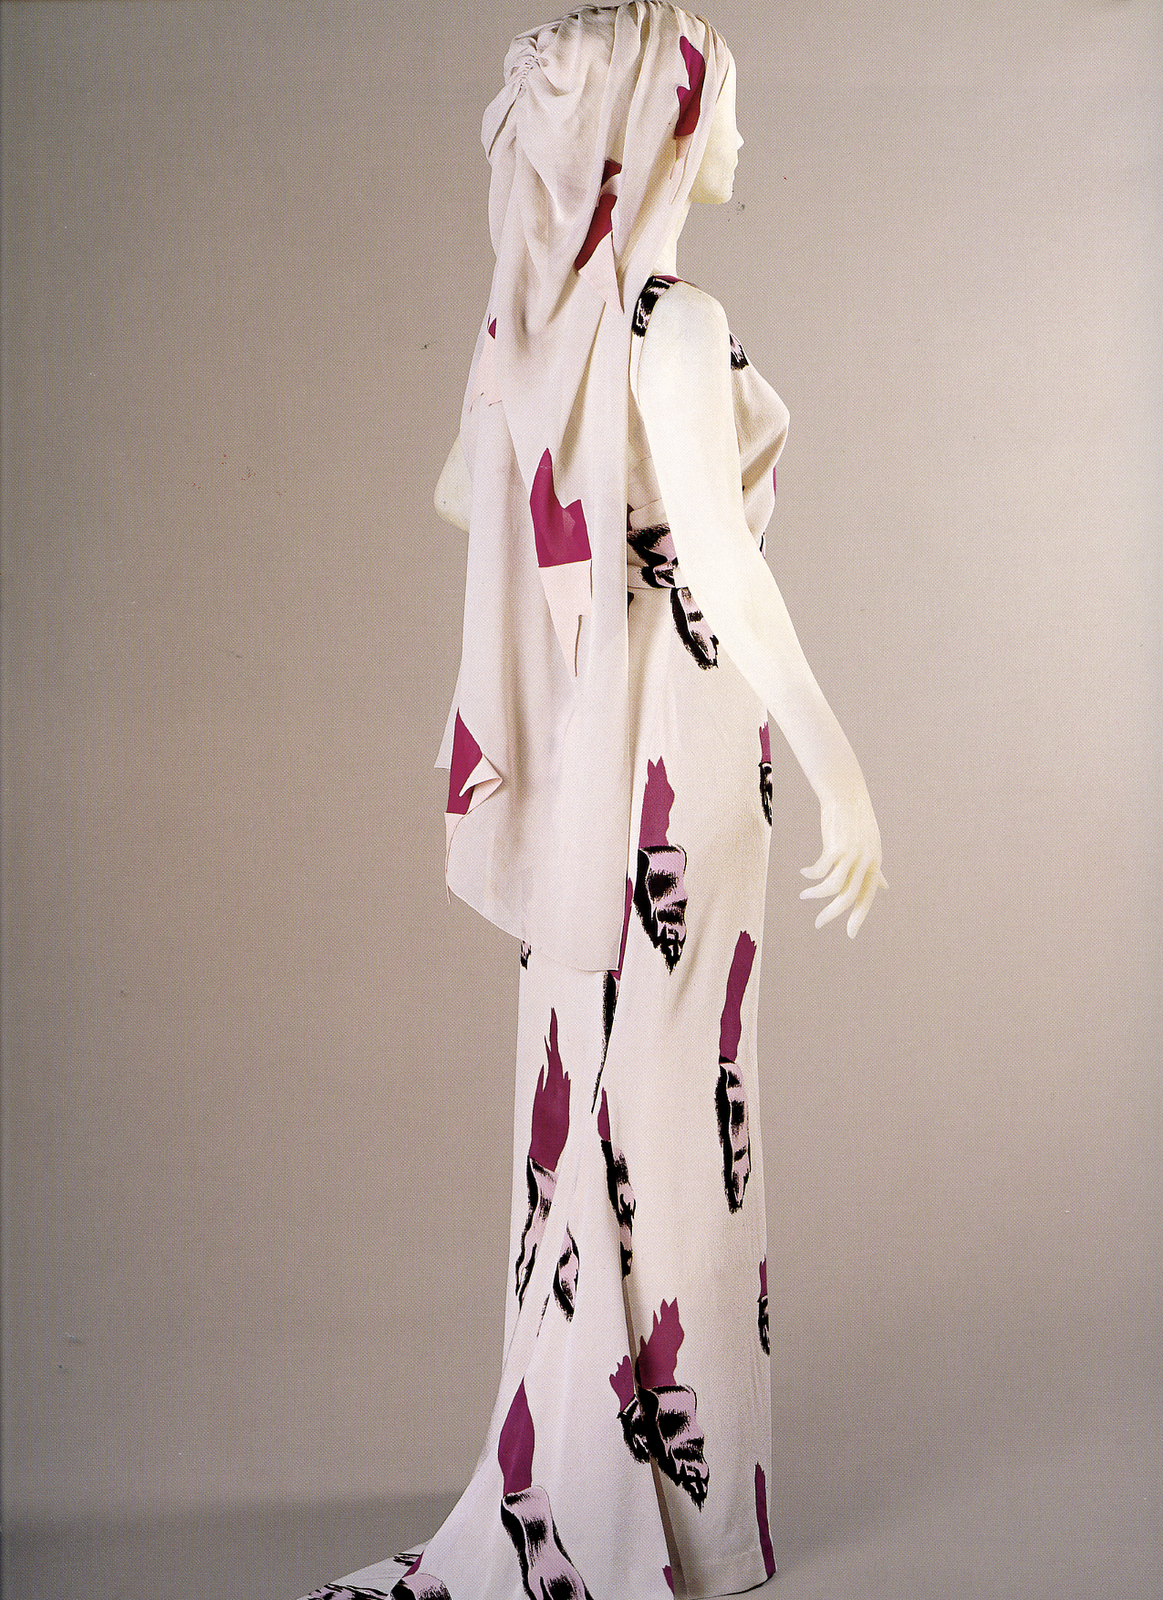 Christian Lacroix's Couture Collection for Schiaparelli